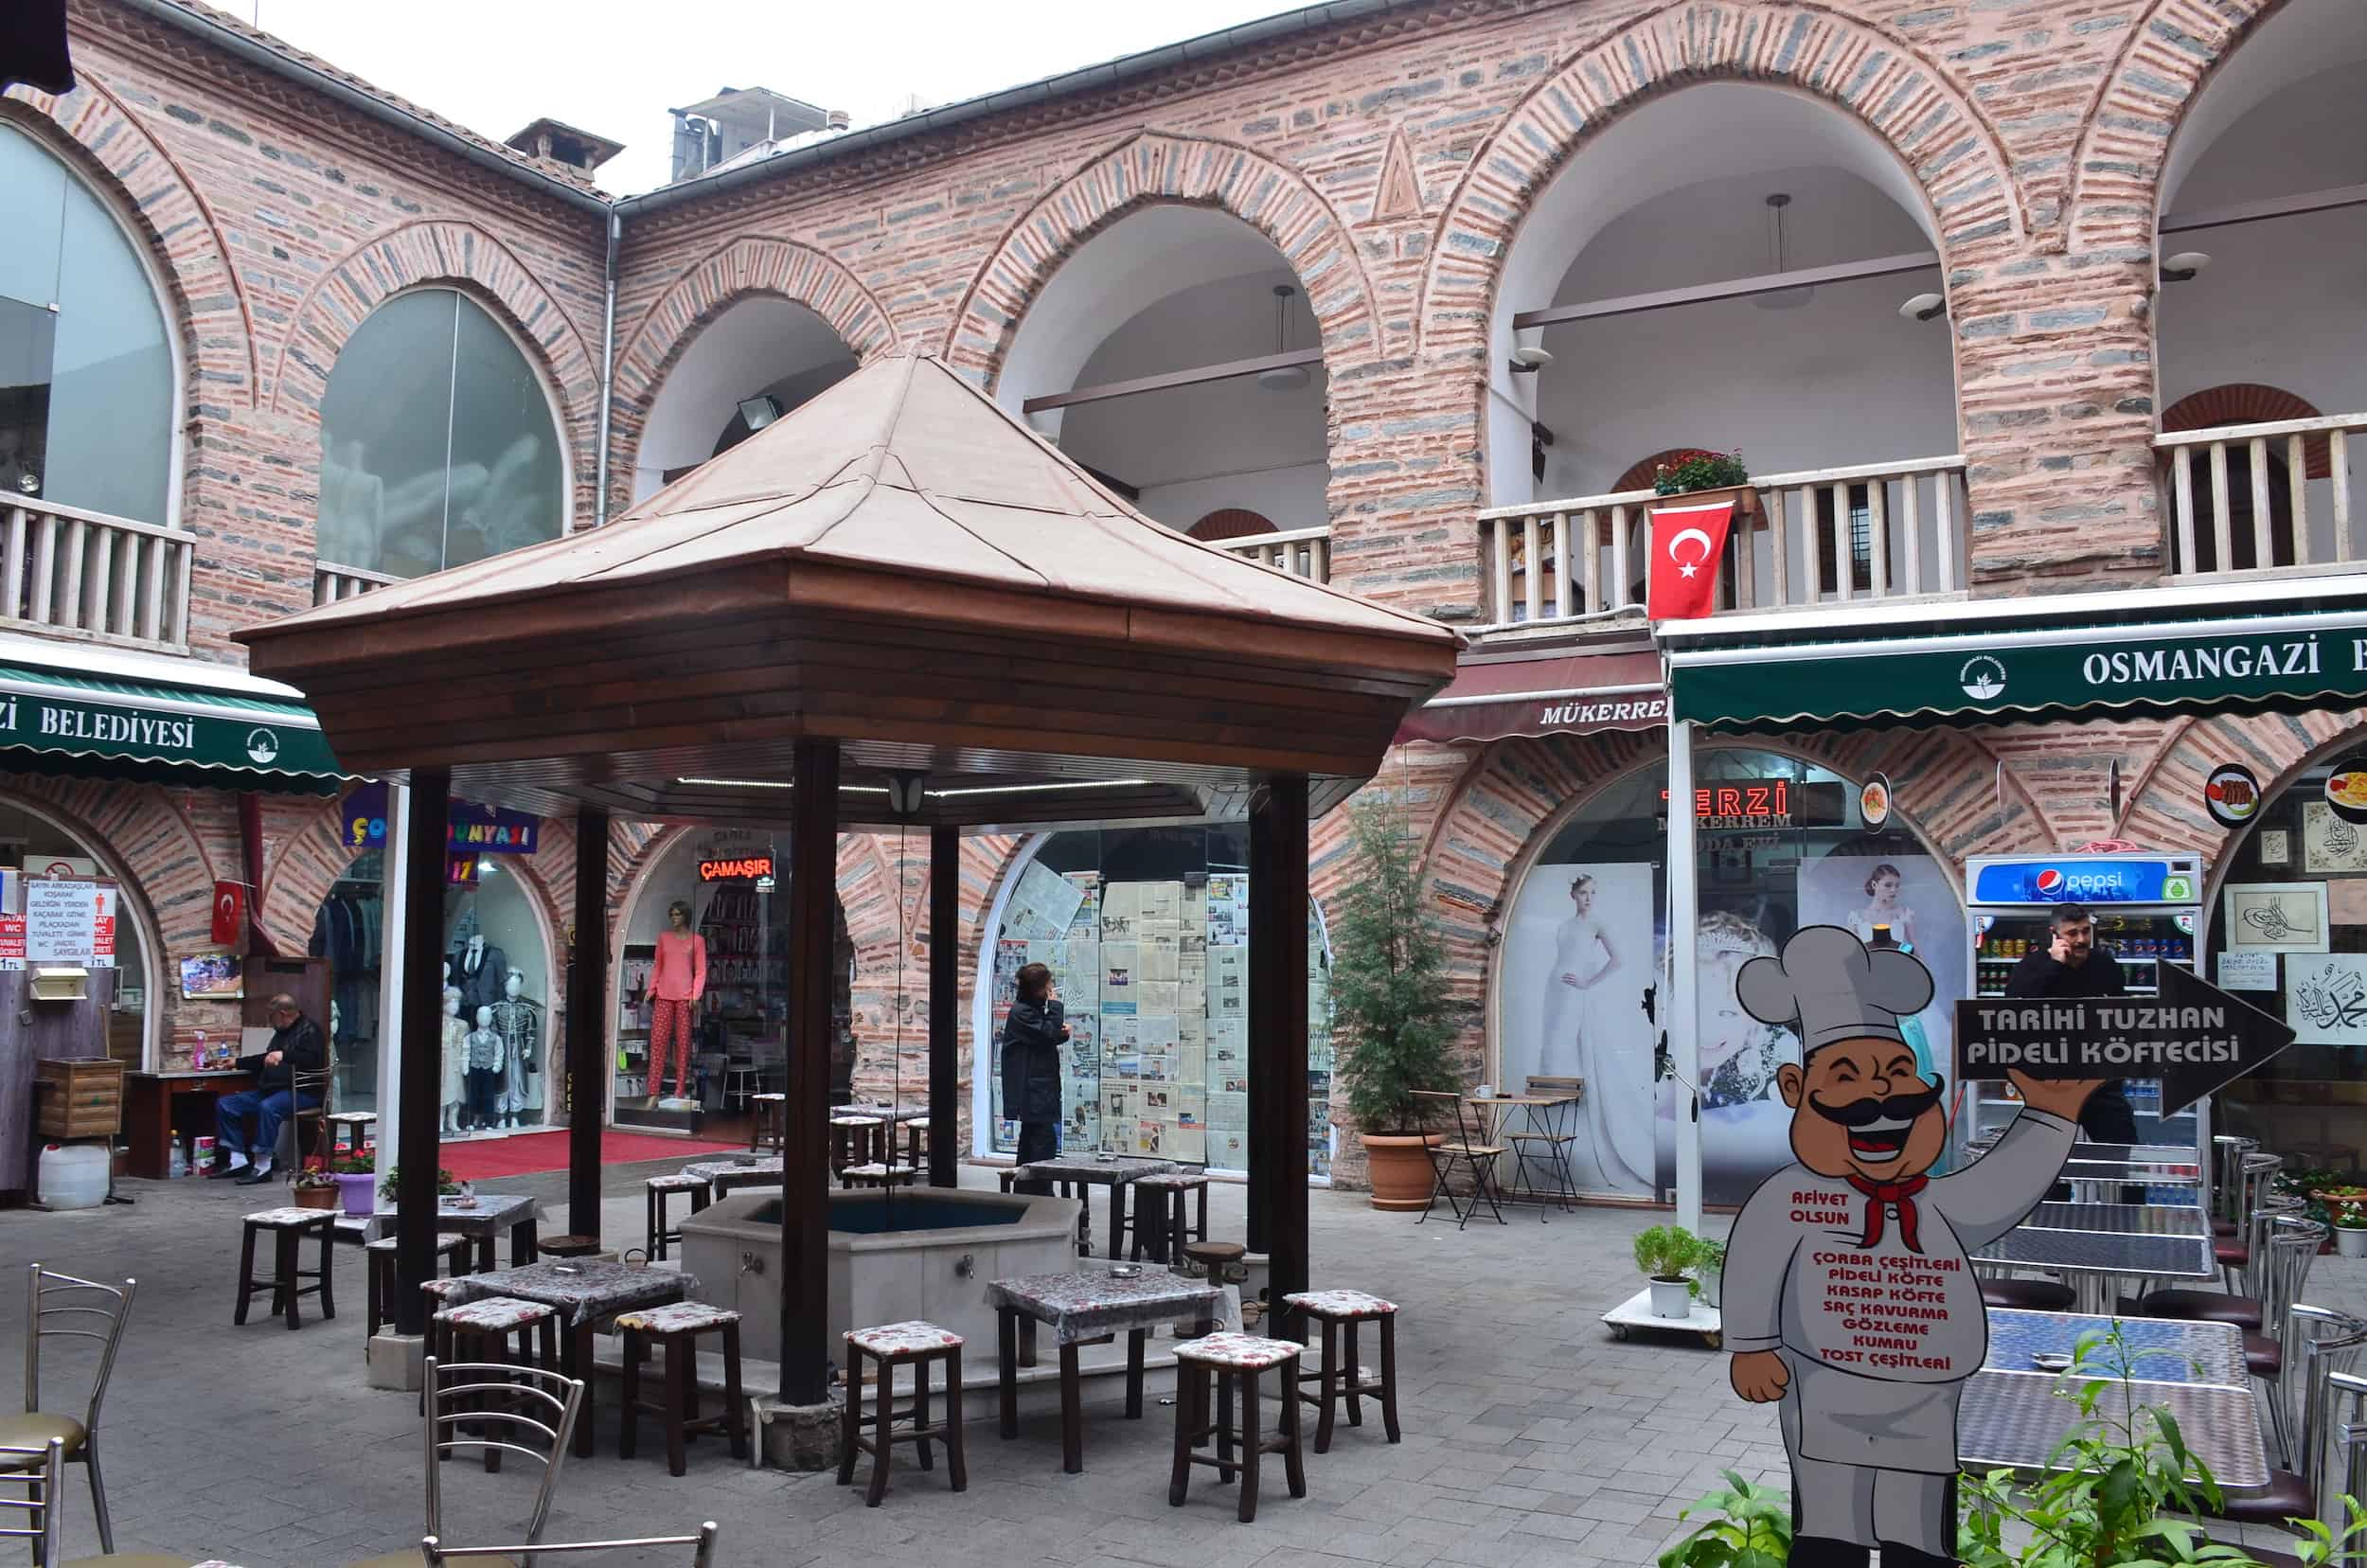 Courtyard of Tuz Han in Bursa, Turkey